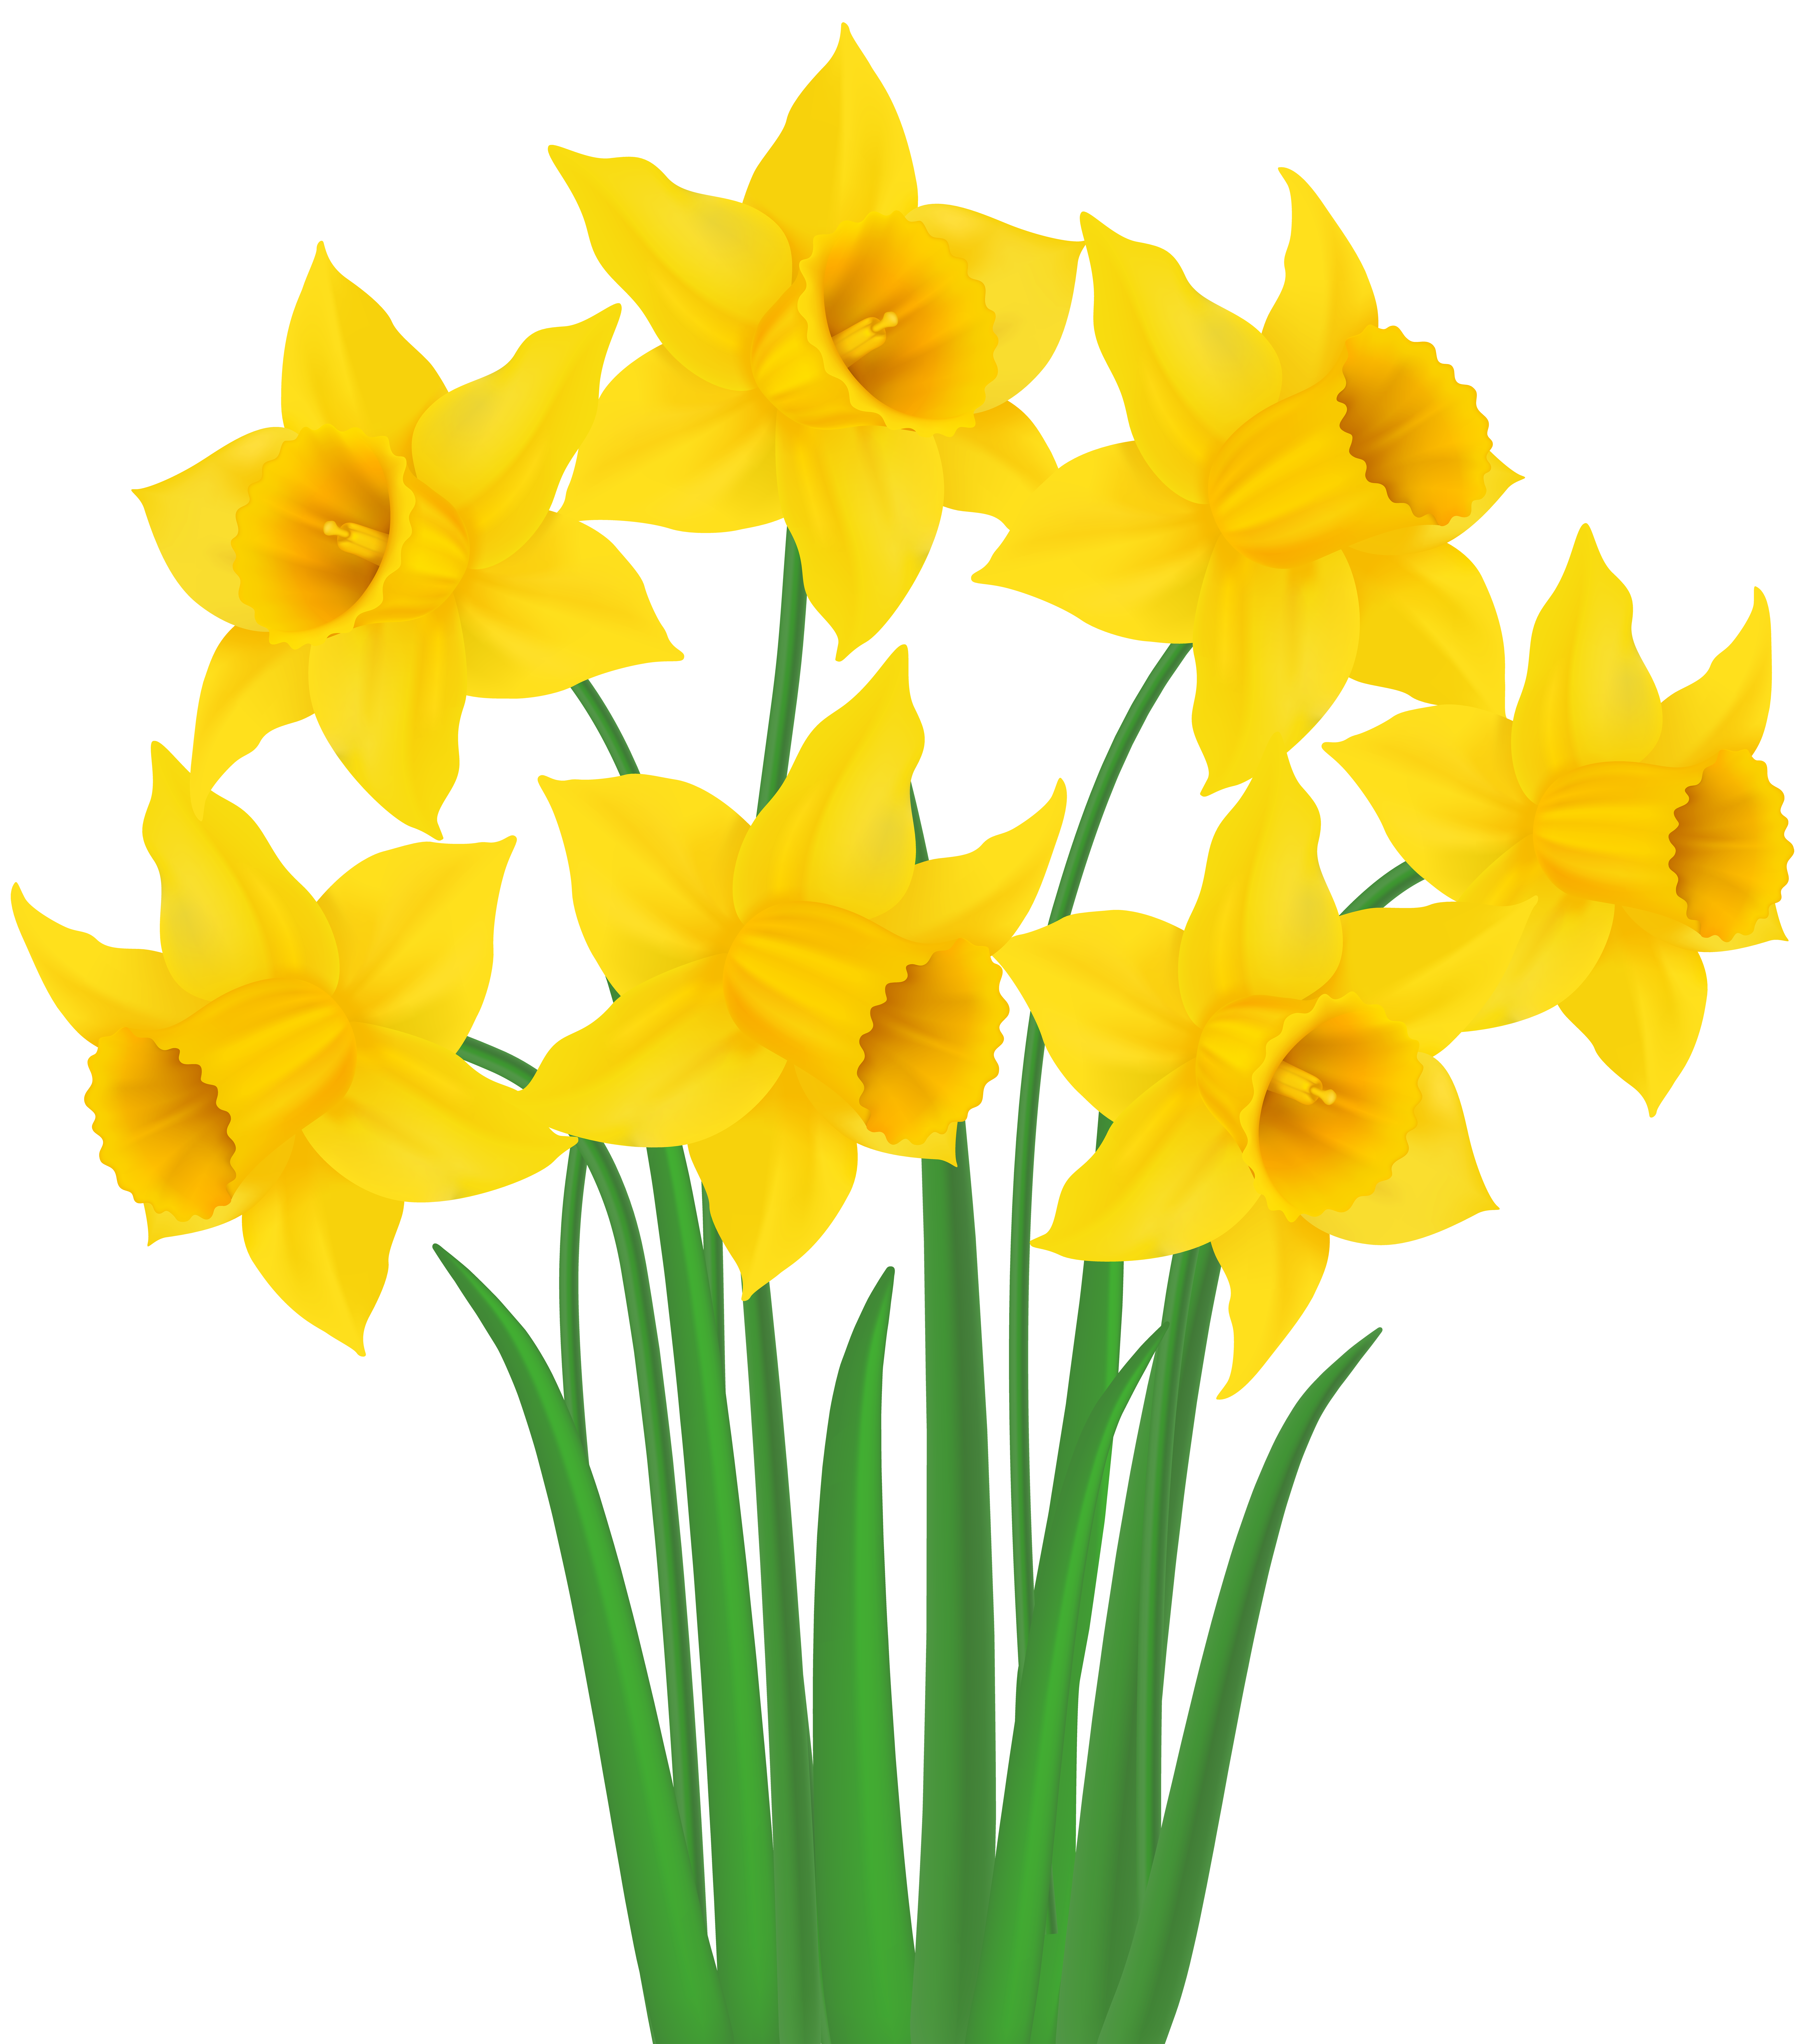 daffodil clipart bloom